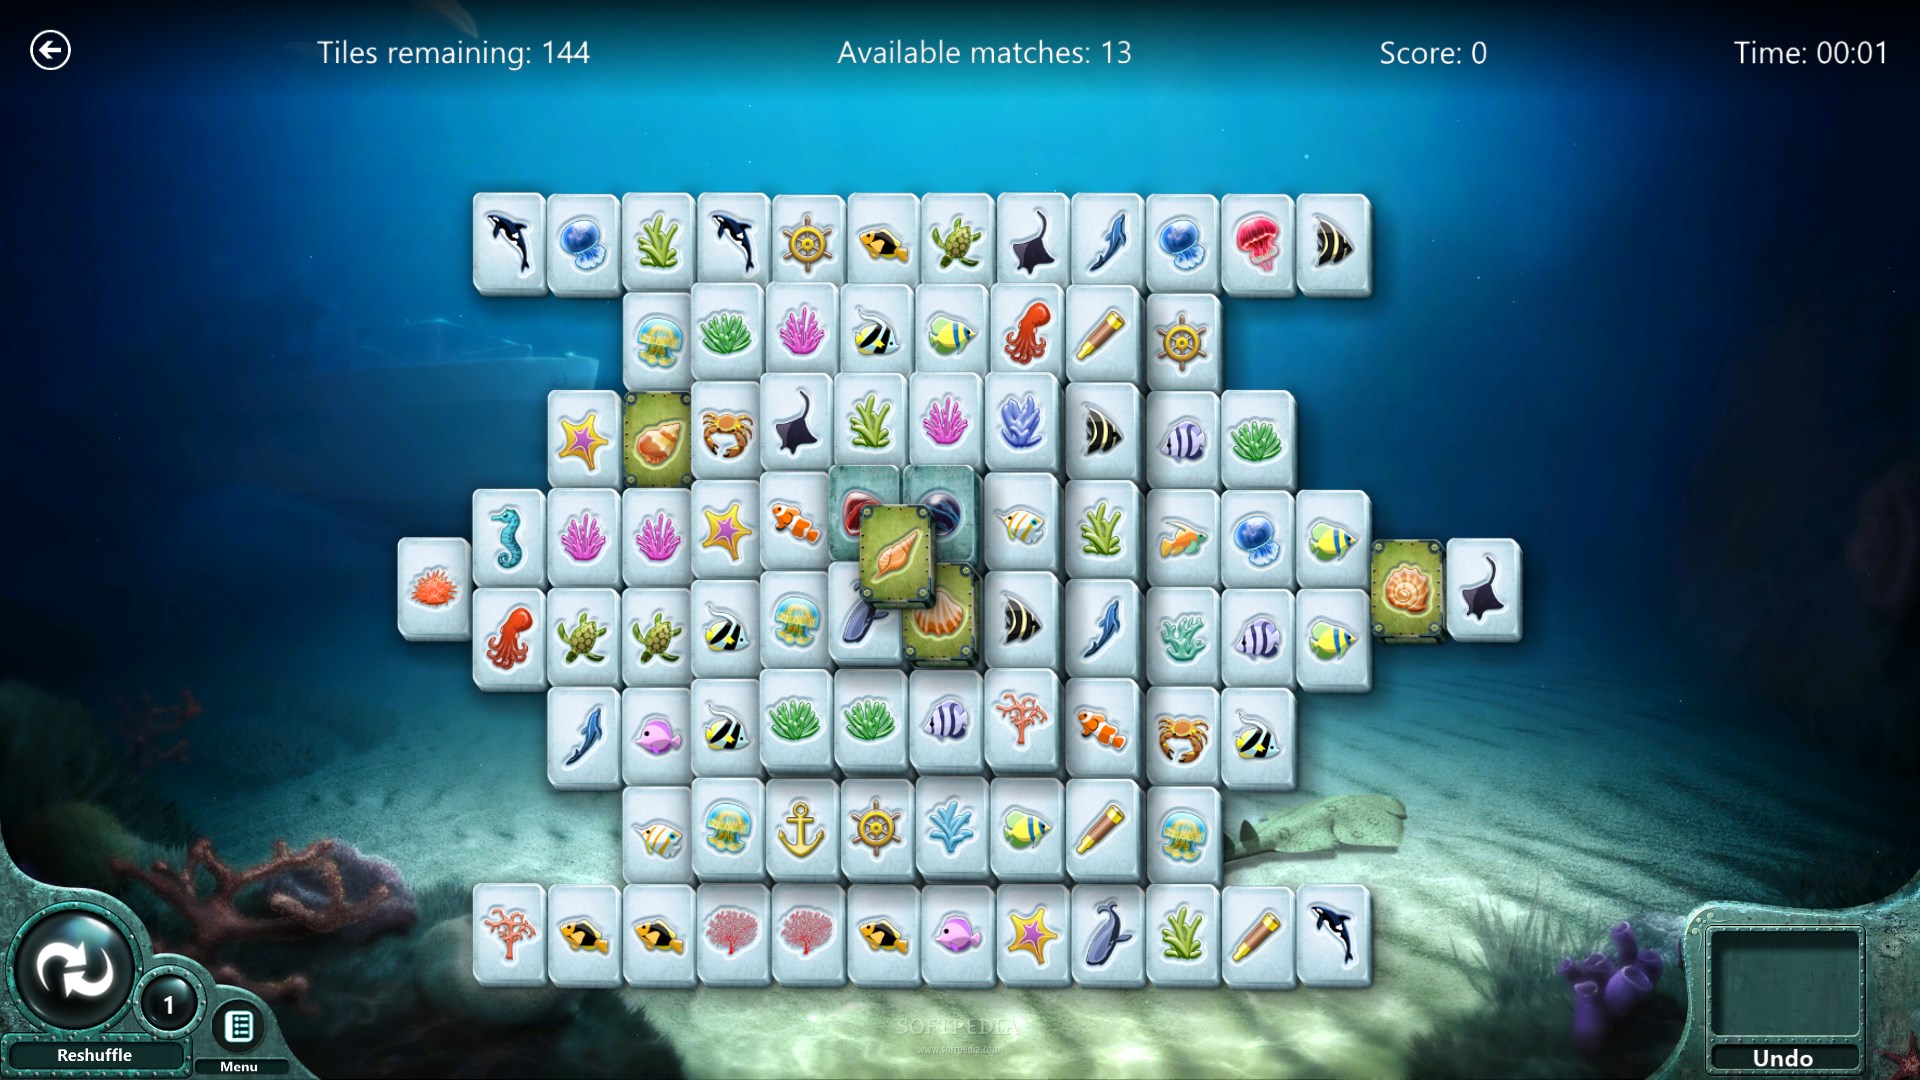 mahjong microsoft free download